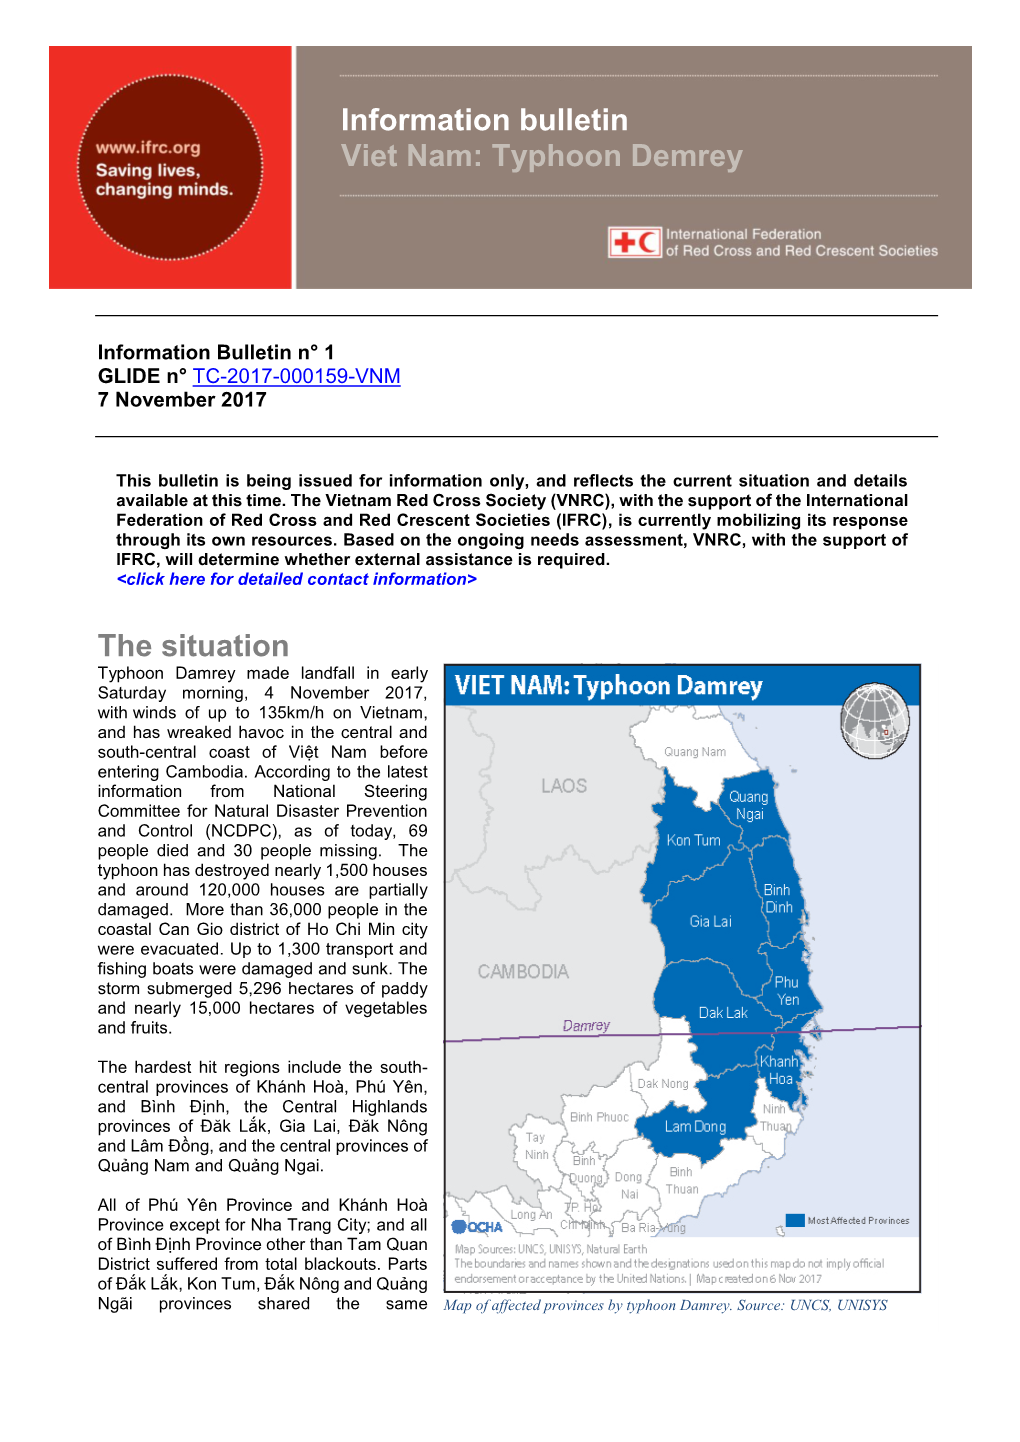 The Situation Information Bulletin Viet Nam: Typhoon Demrey